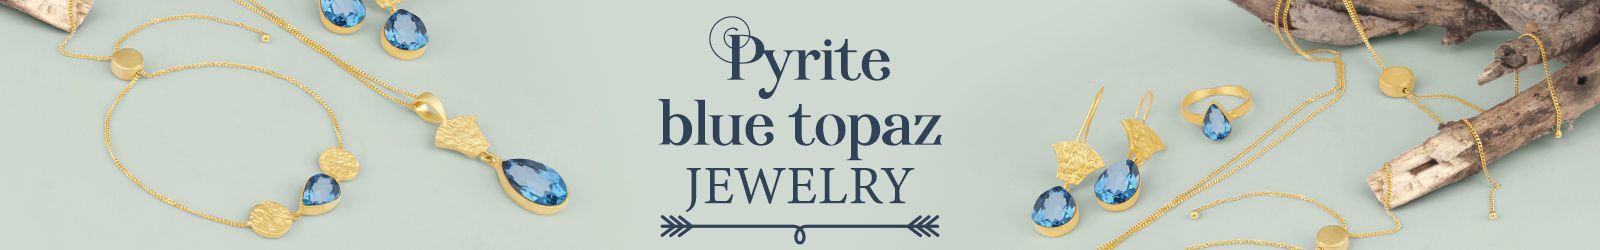 Silver Pyrite Blue Topaz Color Jewelry Wholesale Supplier